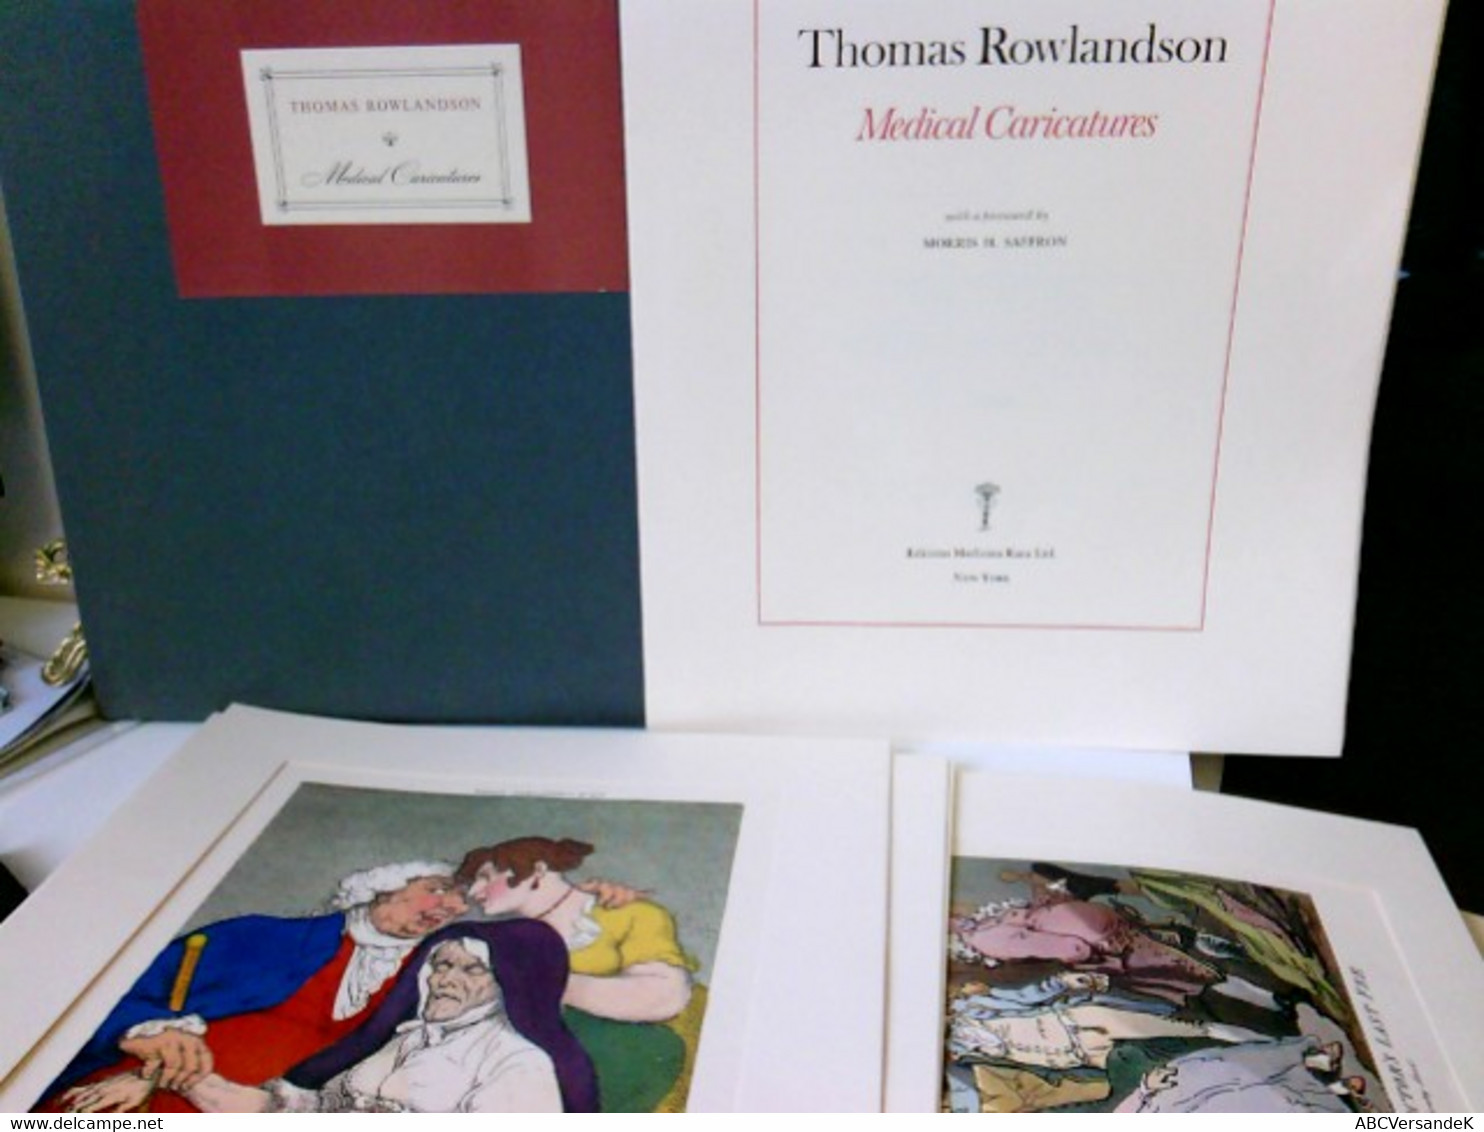 Thomas Rowlandson: Medical Caricatures - Raretés